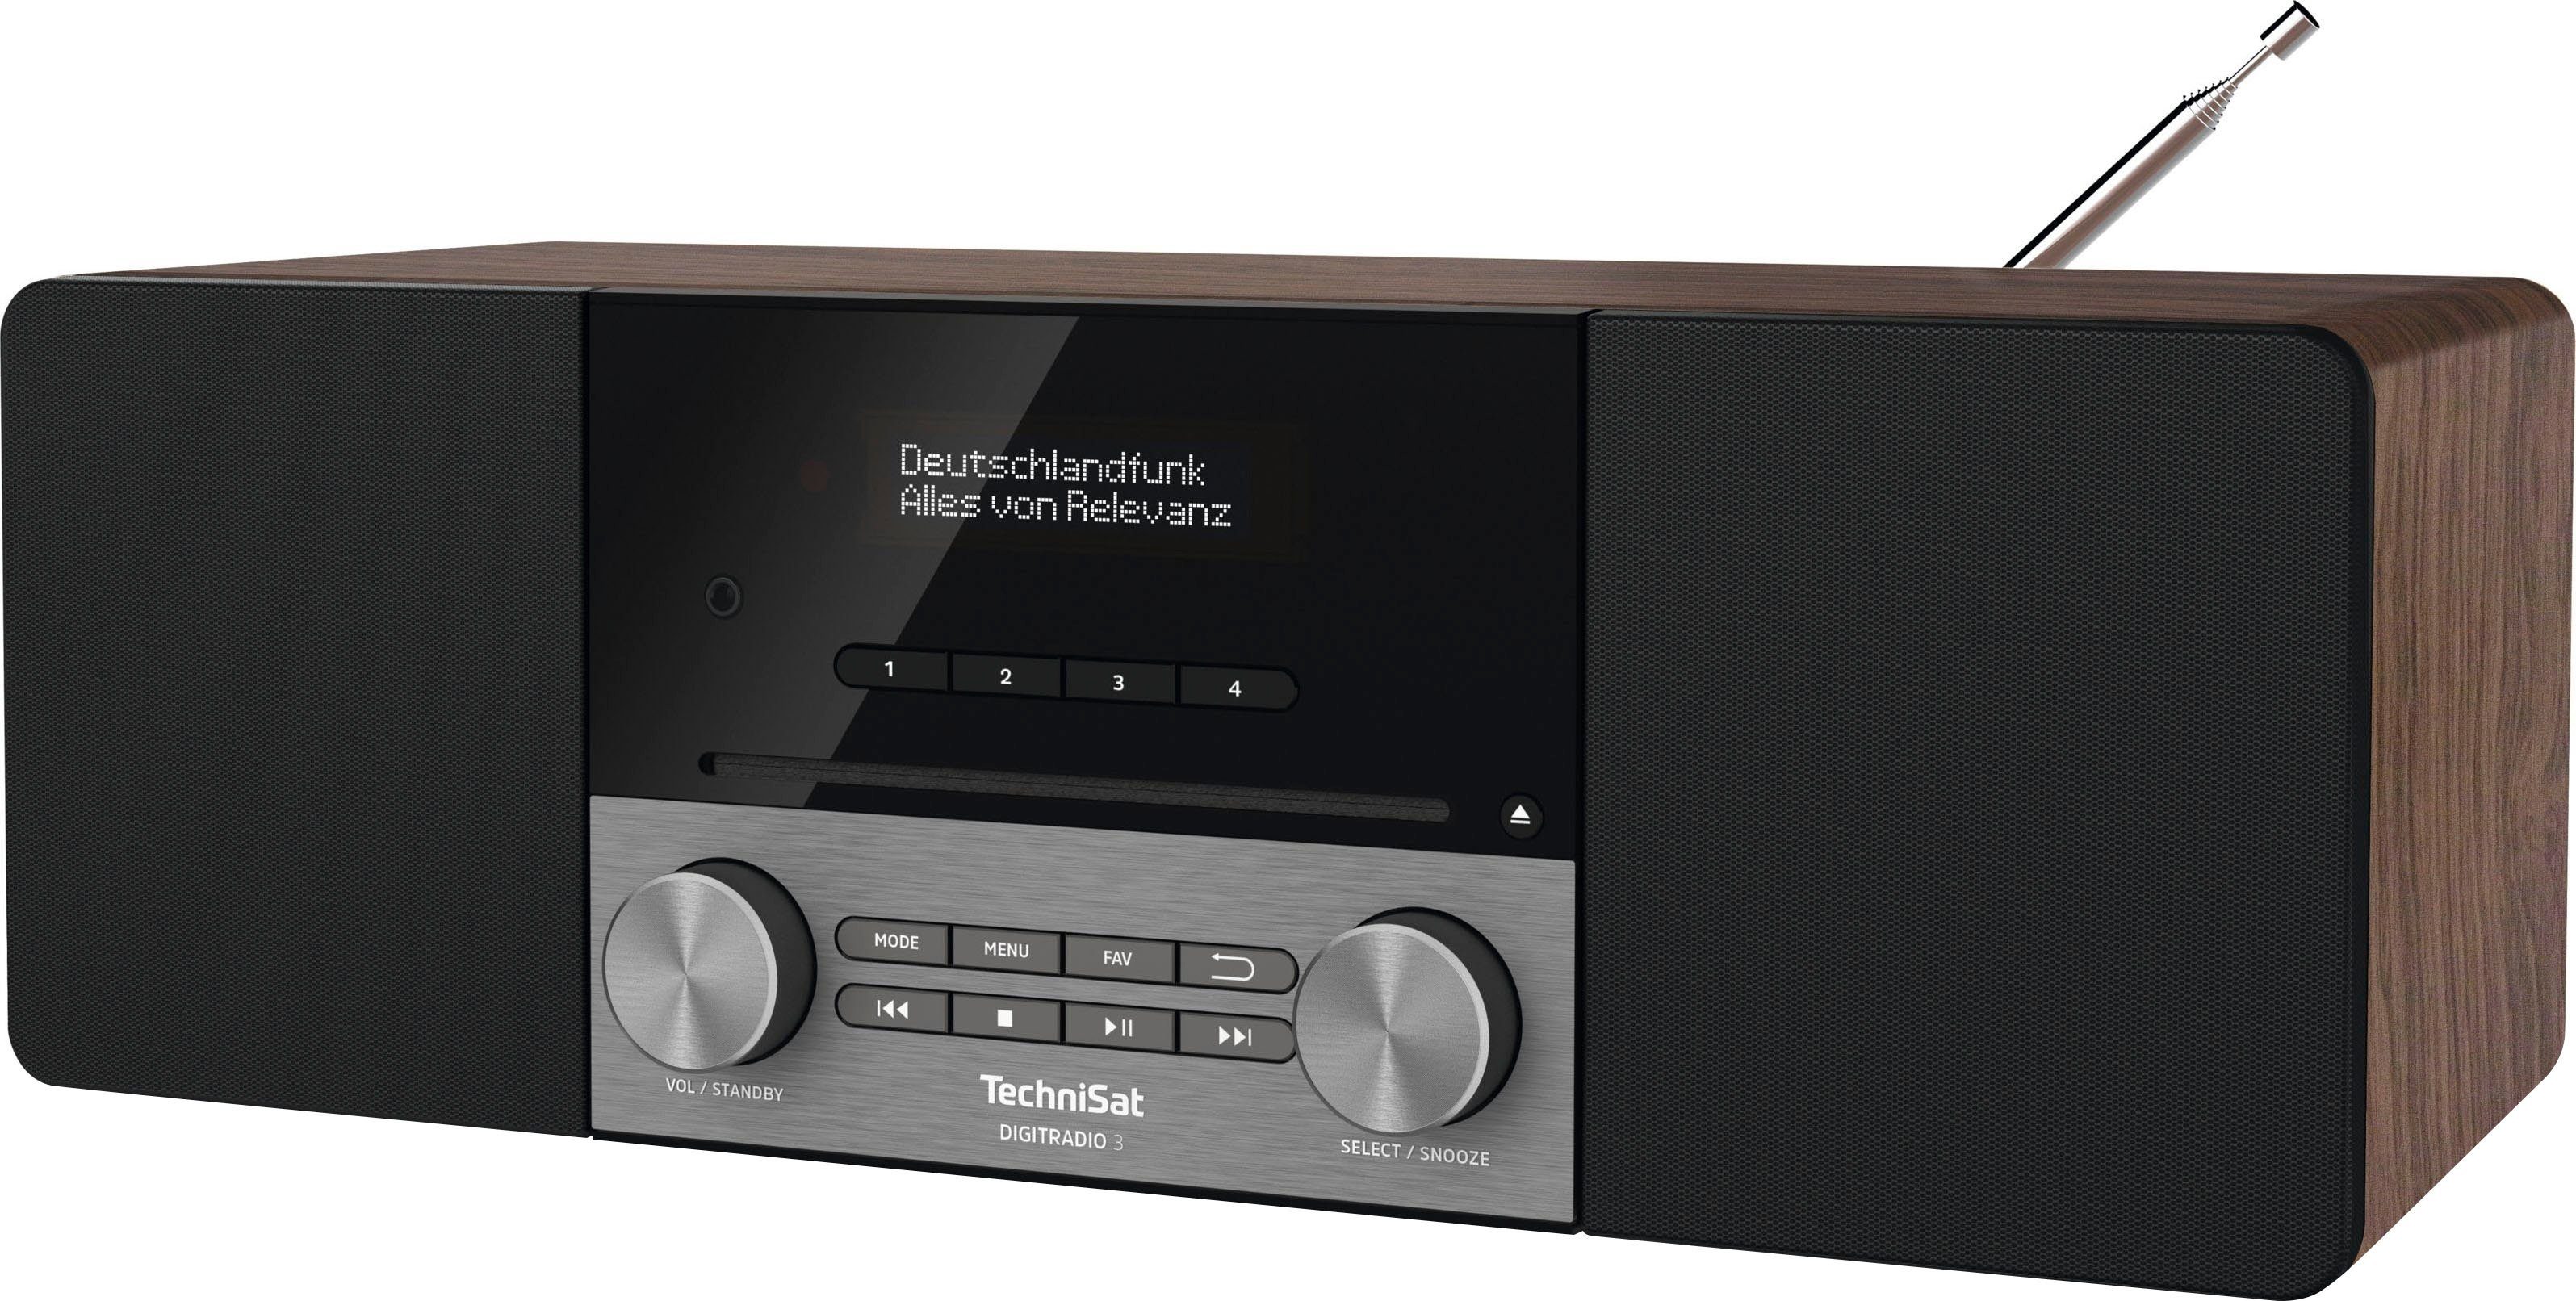 TechniSat 3 Germany) UKW W, (Digitalradio (DAB) Nussbaum in Made CD-Player, (DAB), Digitalradio 20 RDS, mit DIGITRADIO